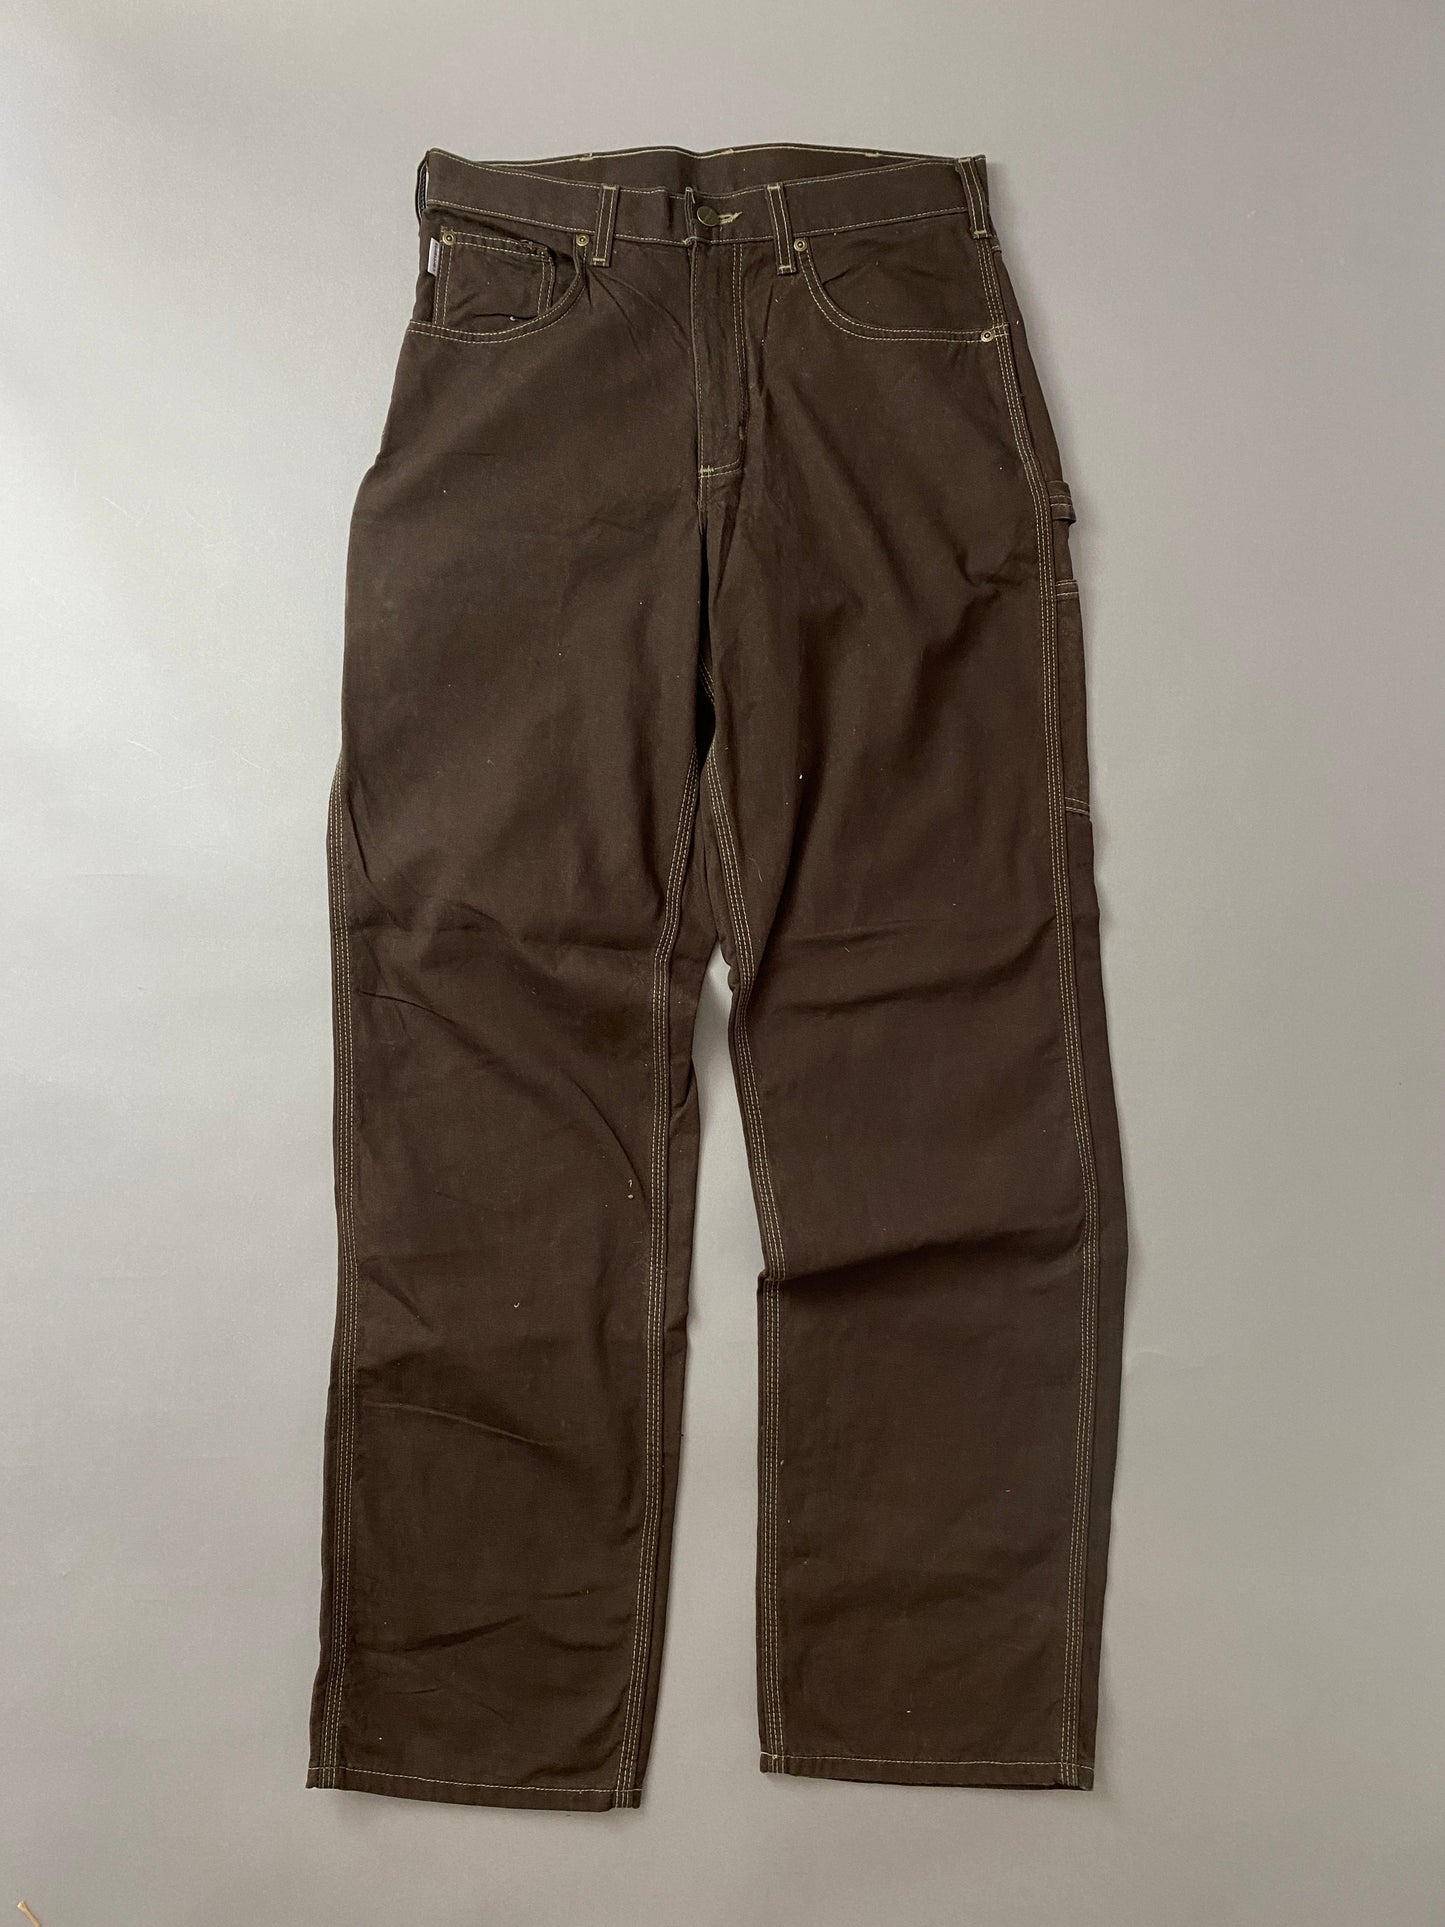 Carhartt Carpenter Pants - 32 x 32